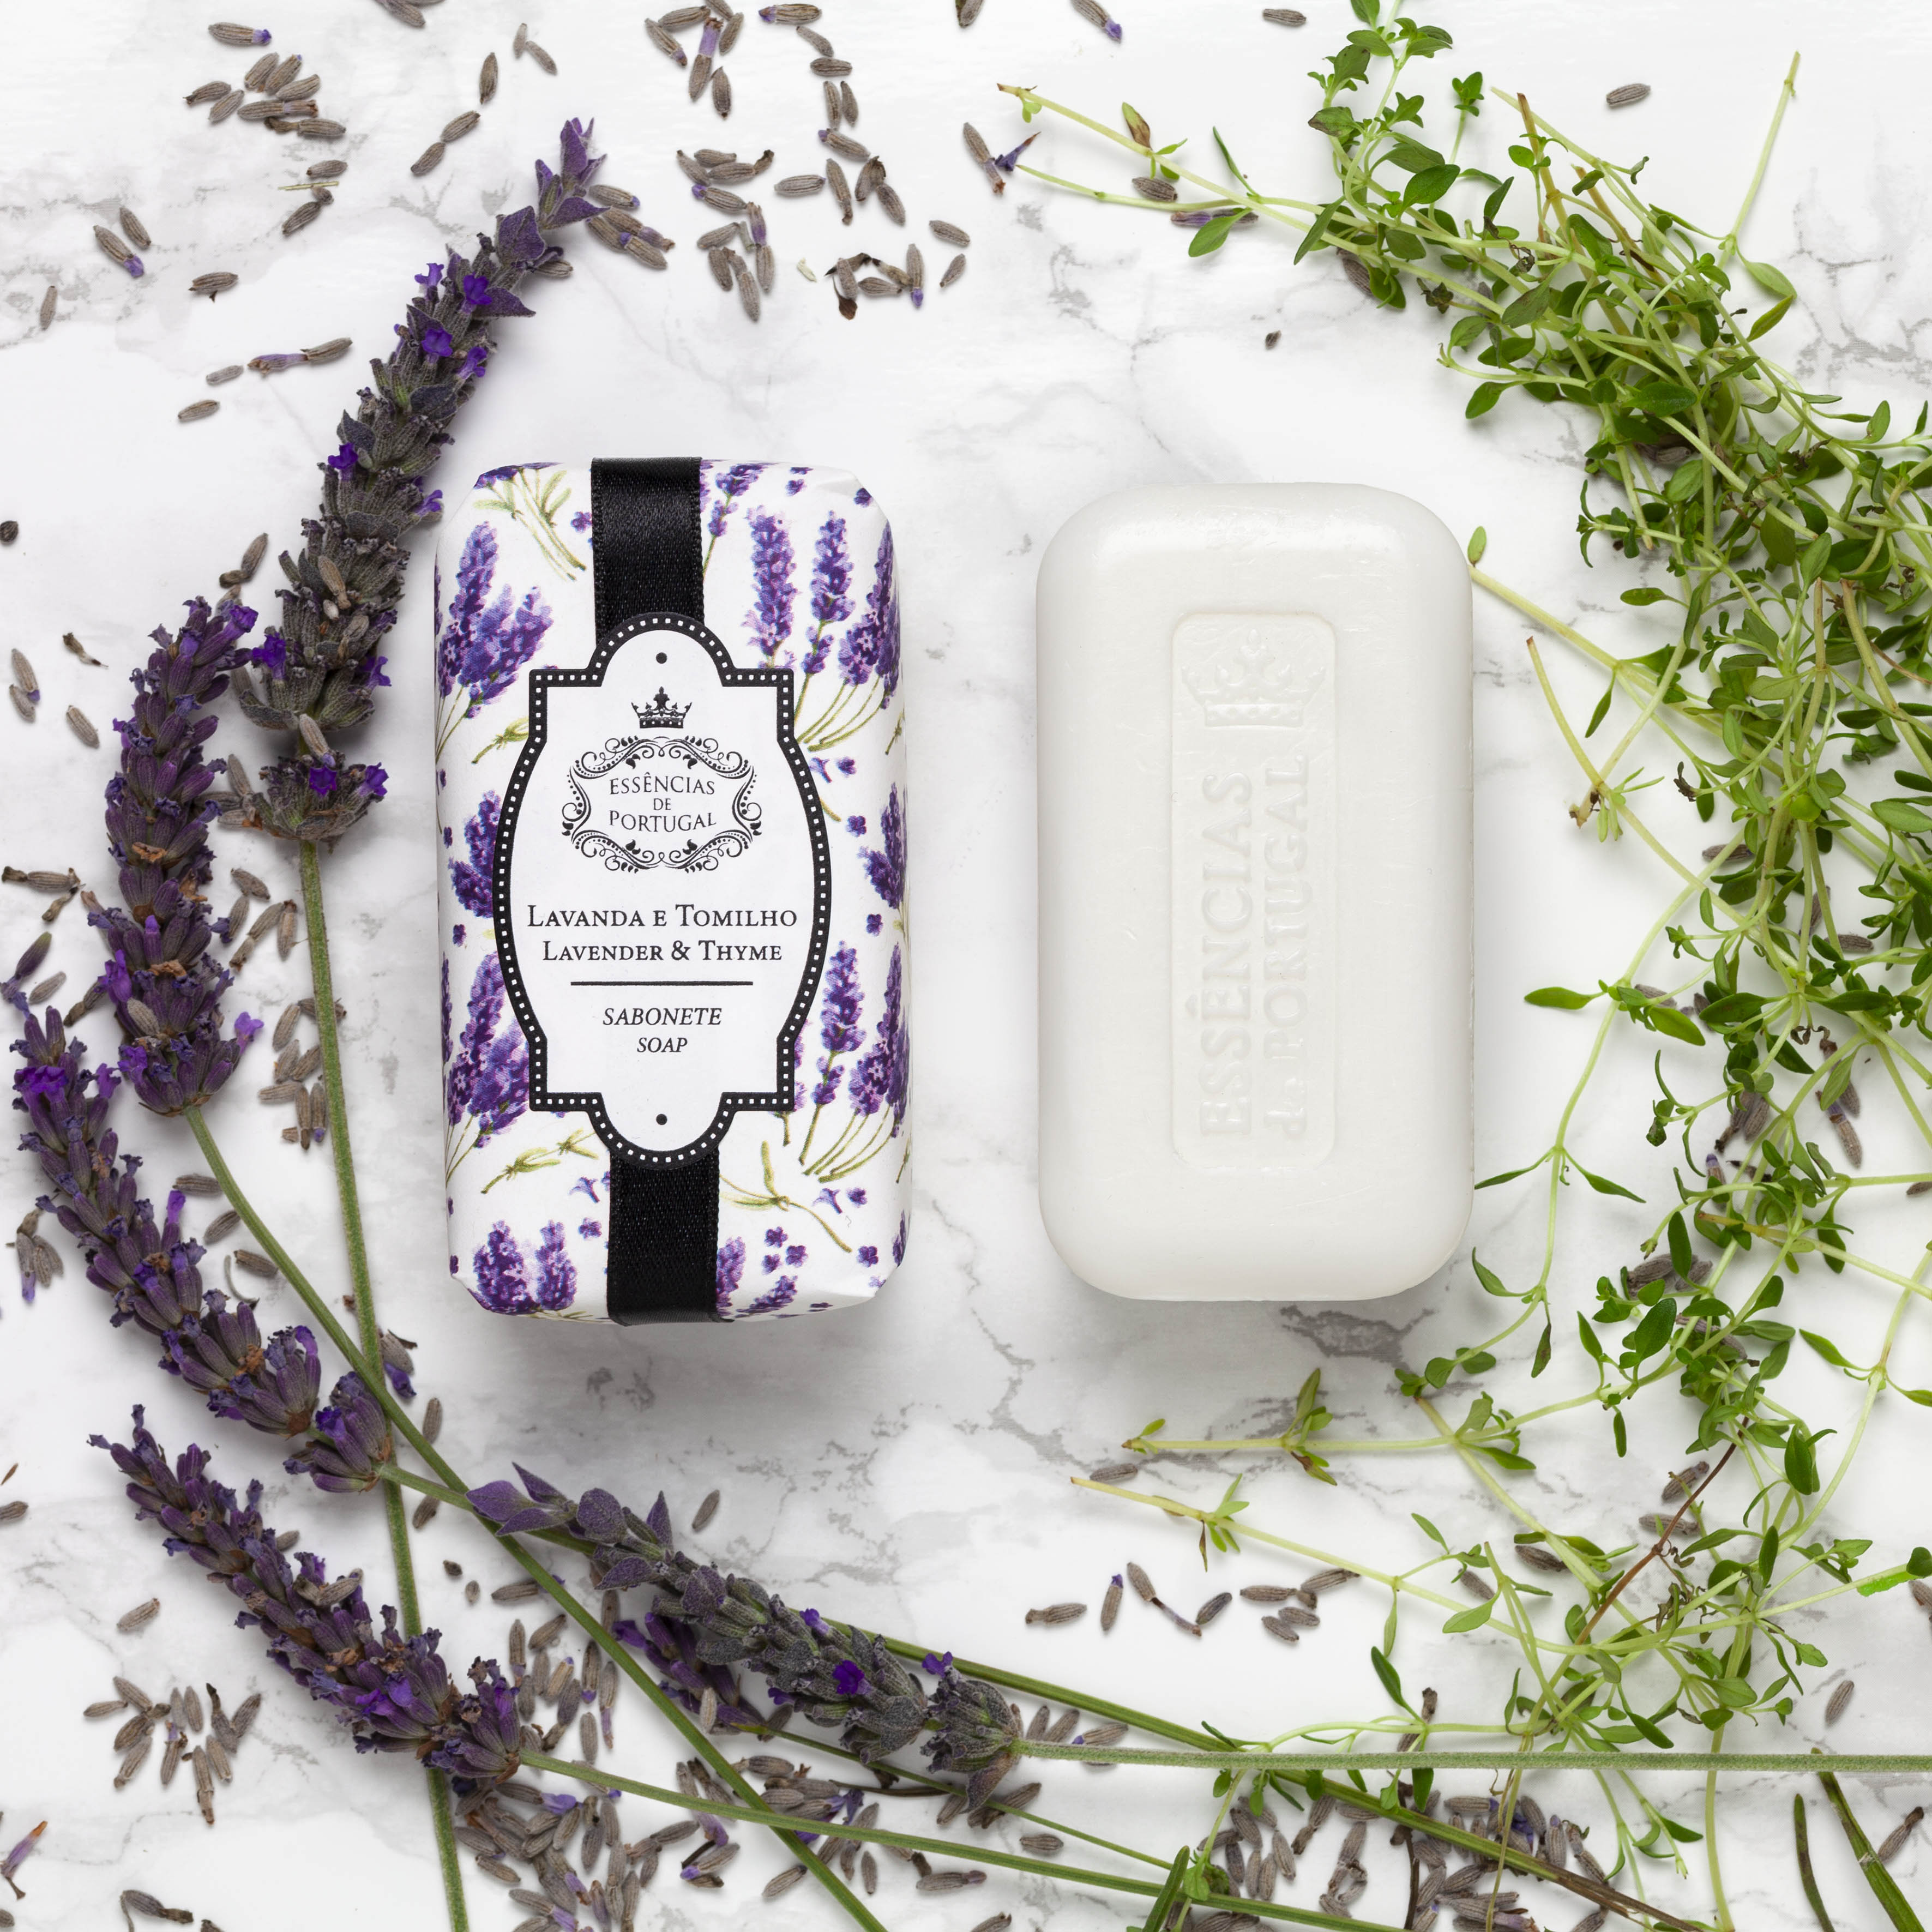 Essências de Portugal Handcrafted Soap//Lavender & Thyme